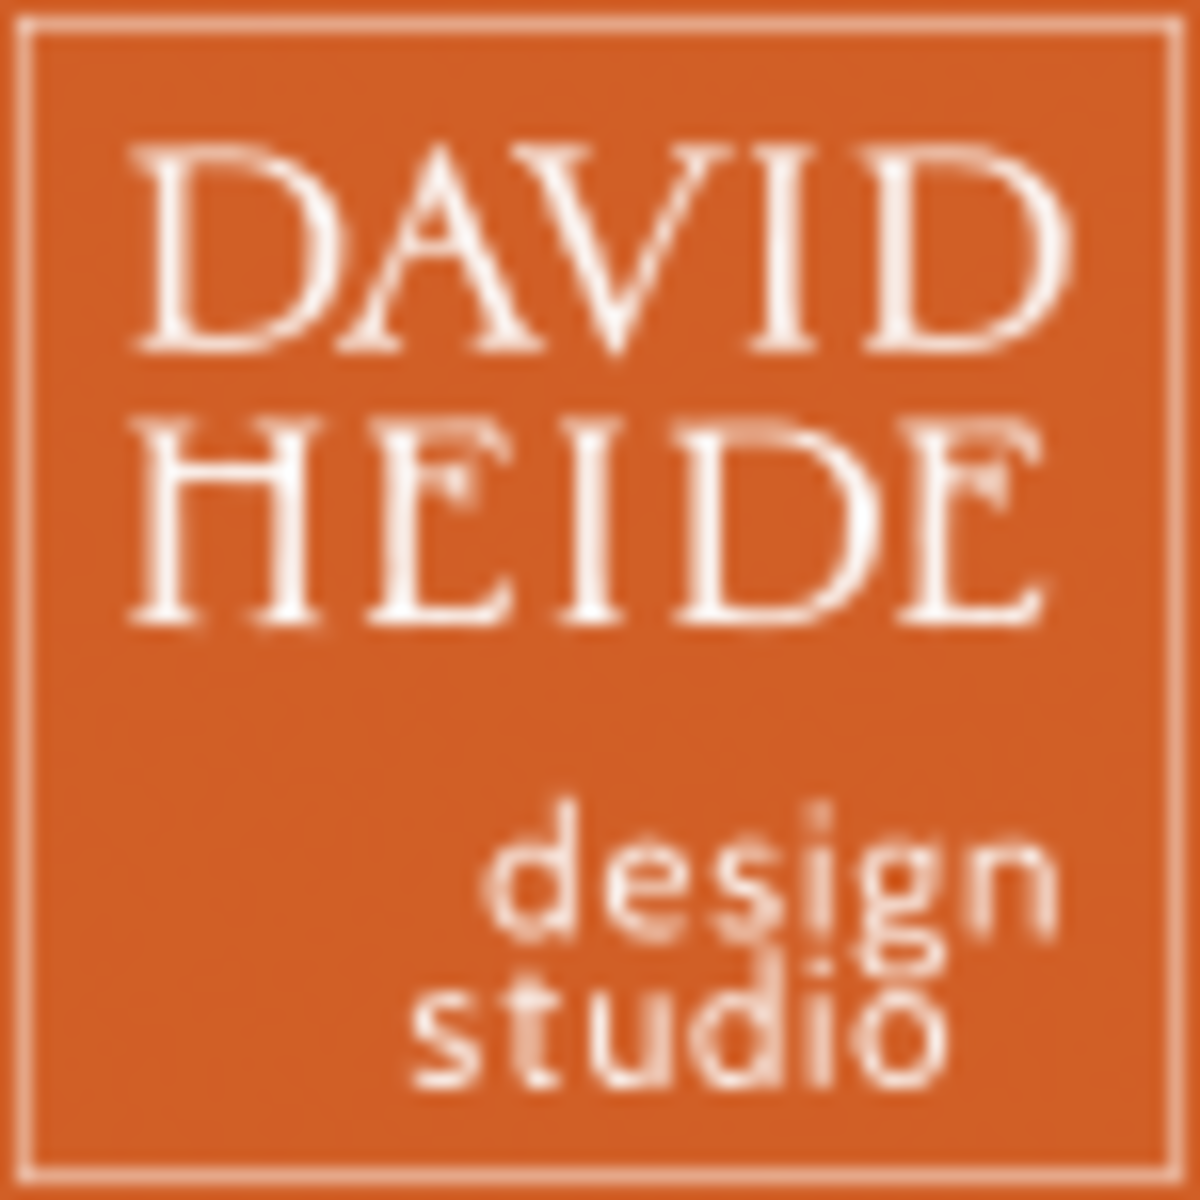 David Heide Design Studio Logo